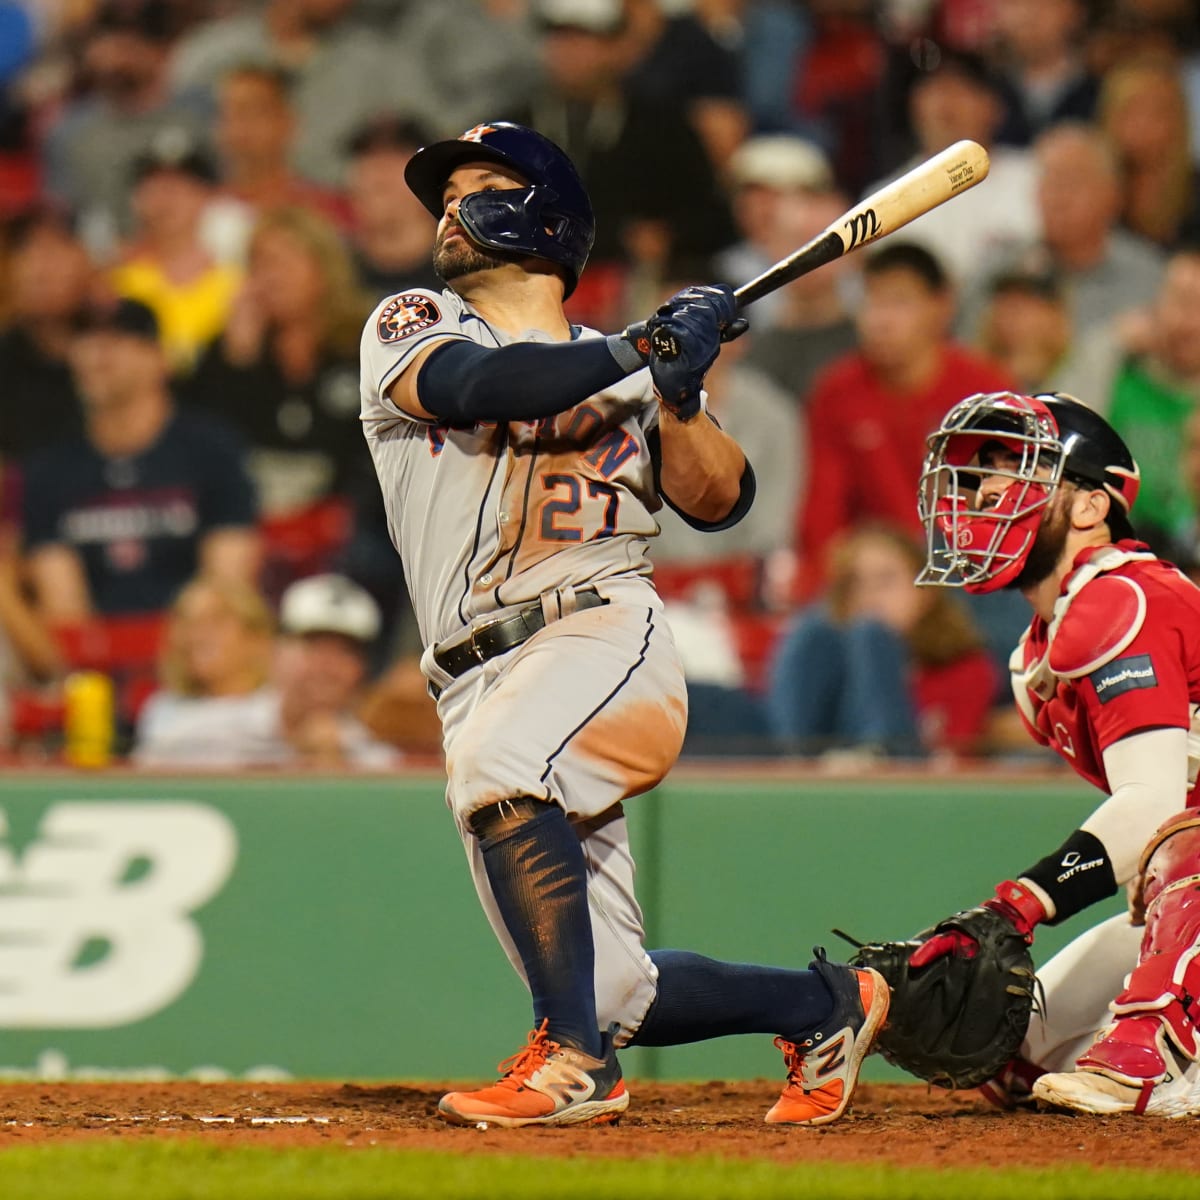 Jose Altuve injury update: Astros star 'ahead of schedule